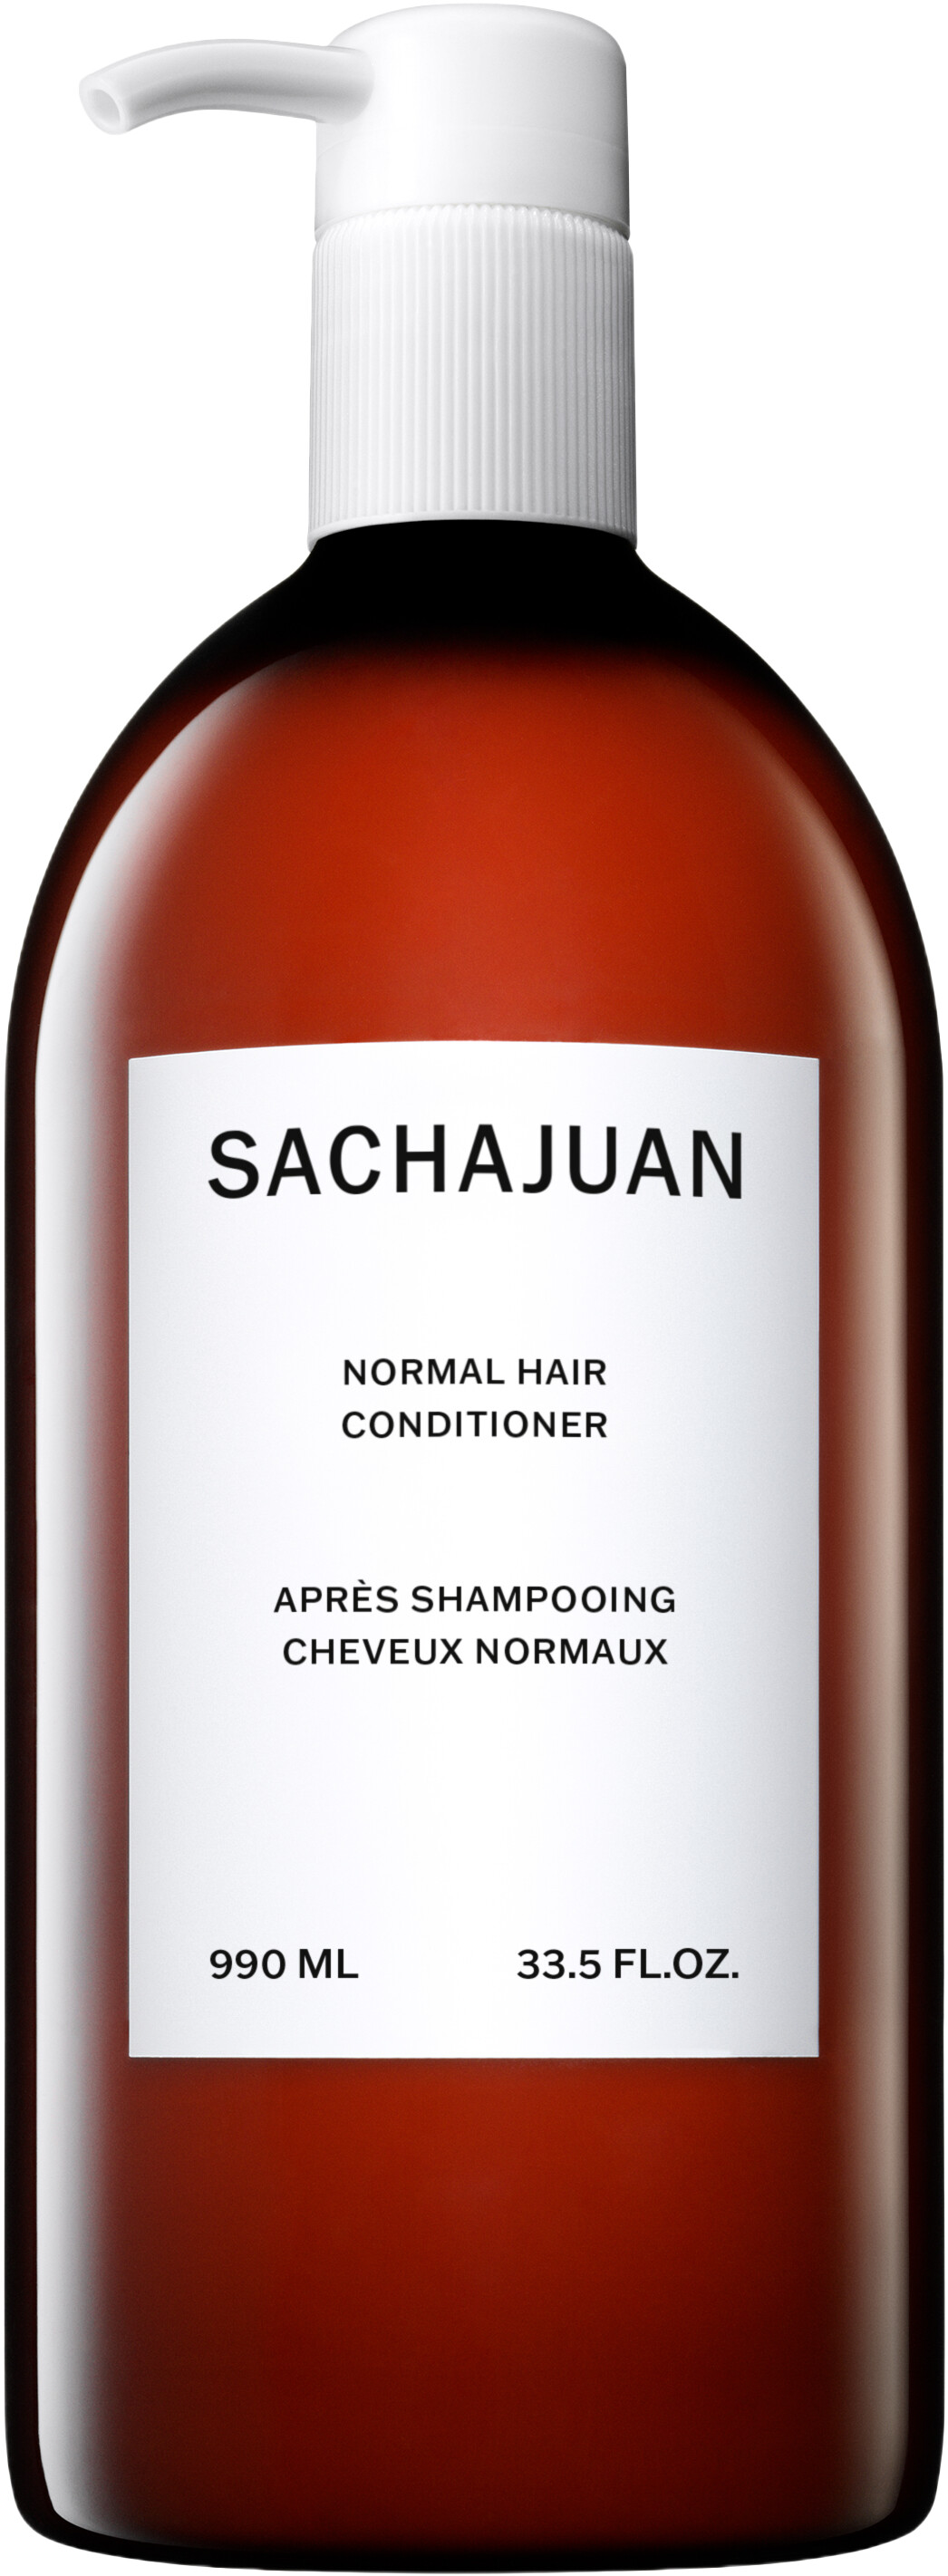 Sachajuan Normal Hair Conditioner 990ml